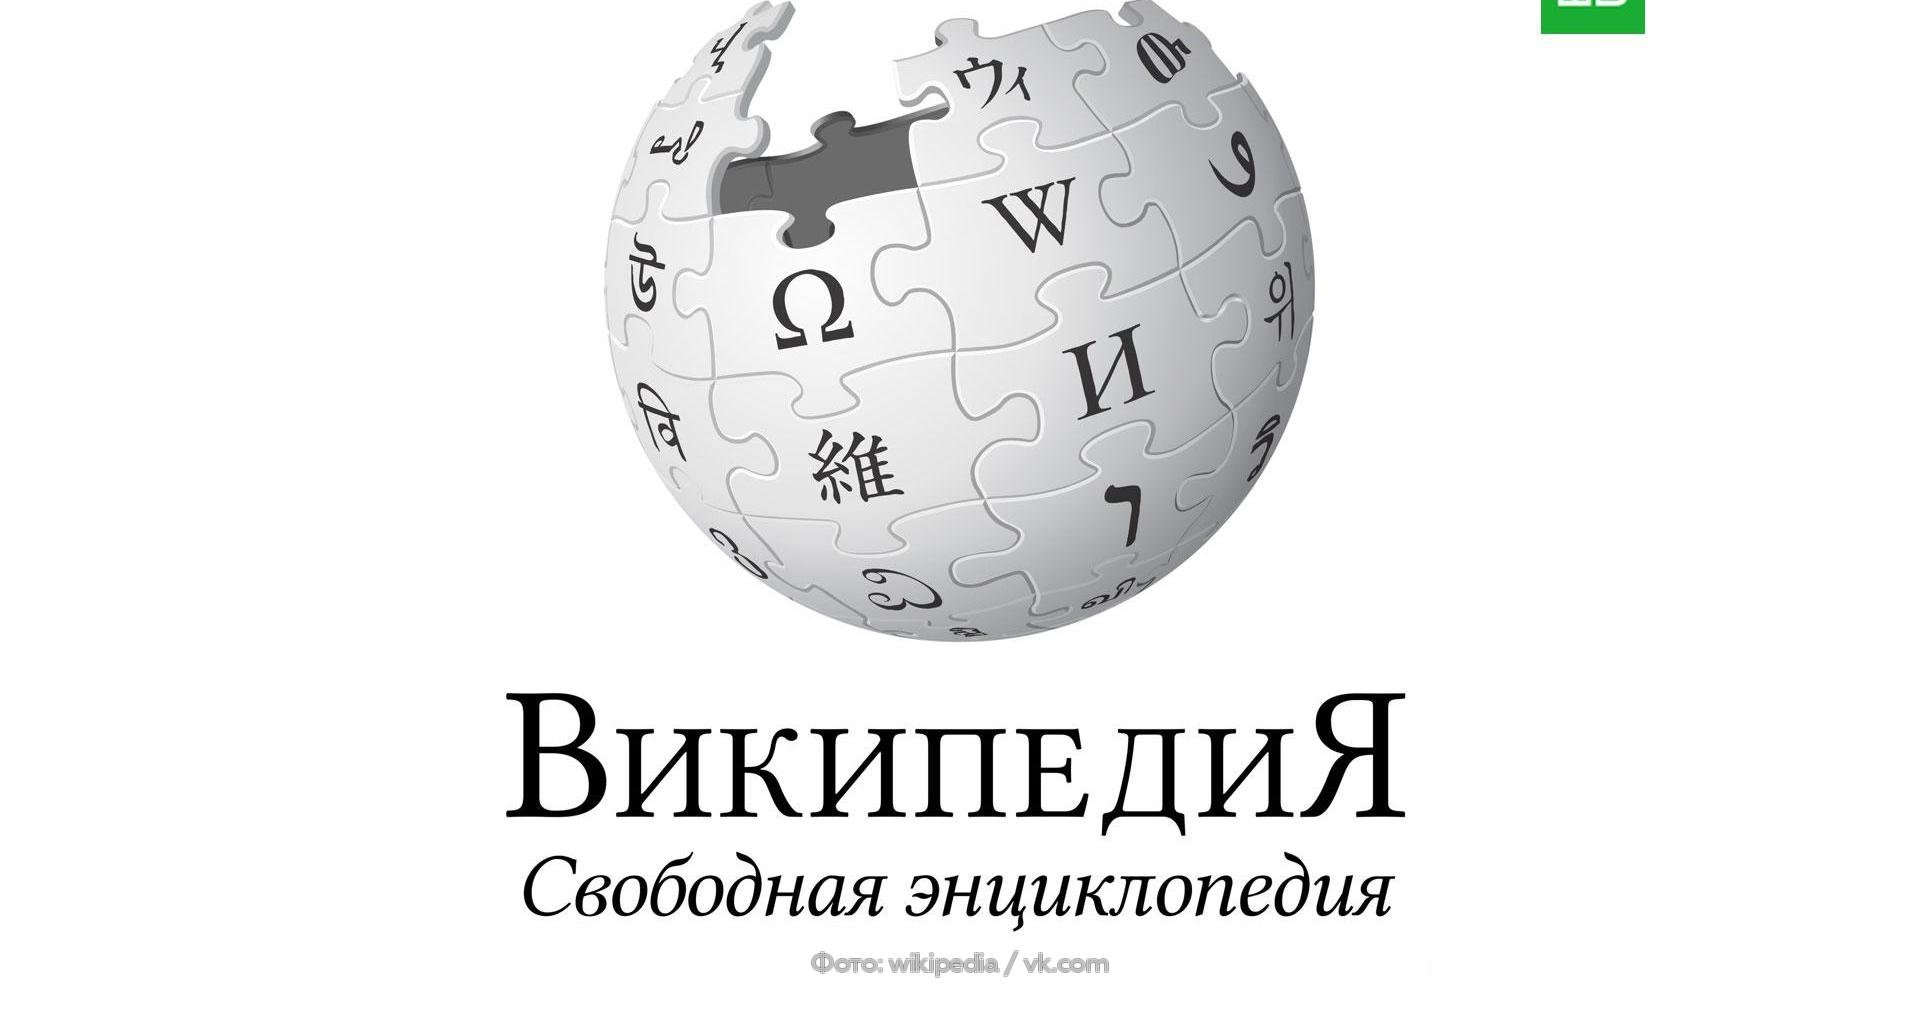 Https ru wikipedia org wiki википедия. Википедия лого. Wikipedia фото. Википедия логотип картинка. Википедия картинки.